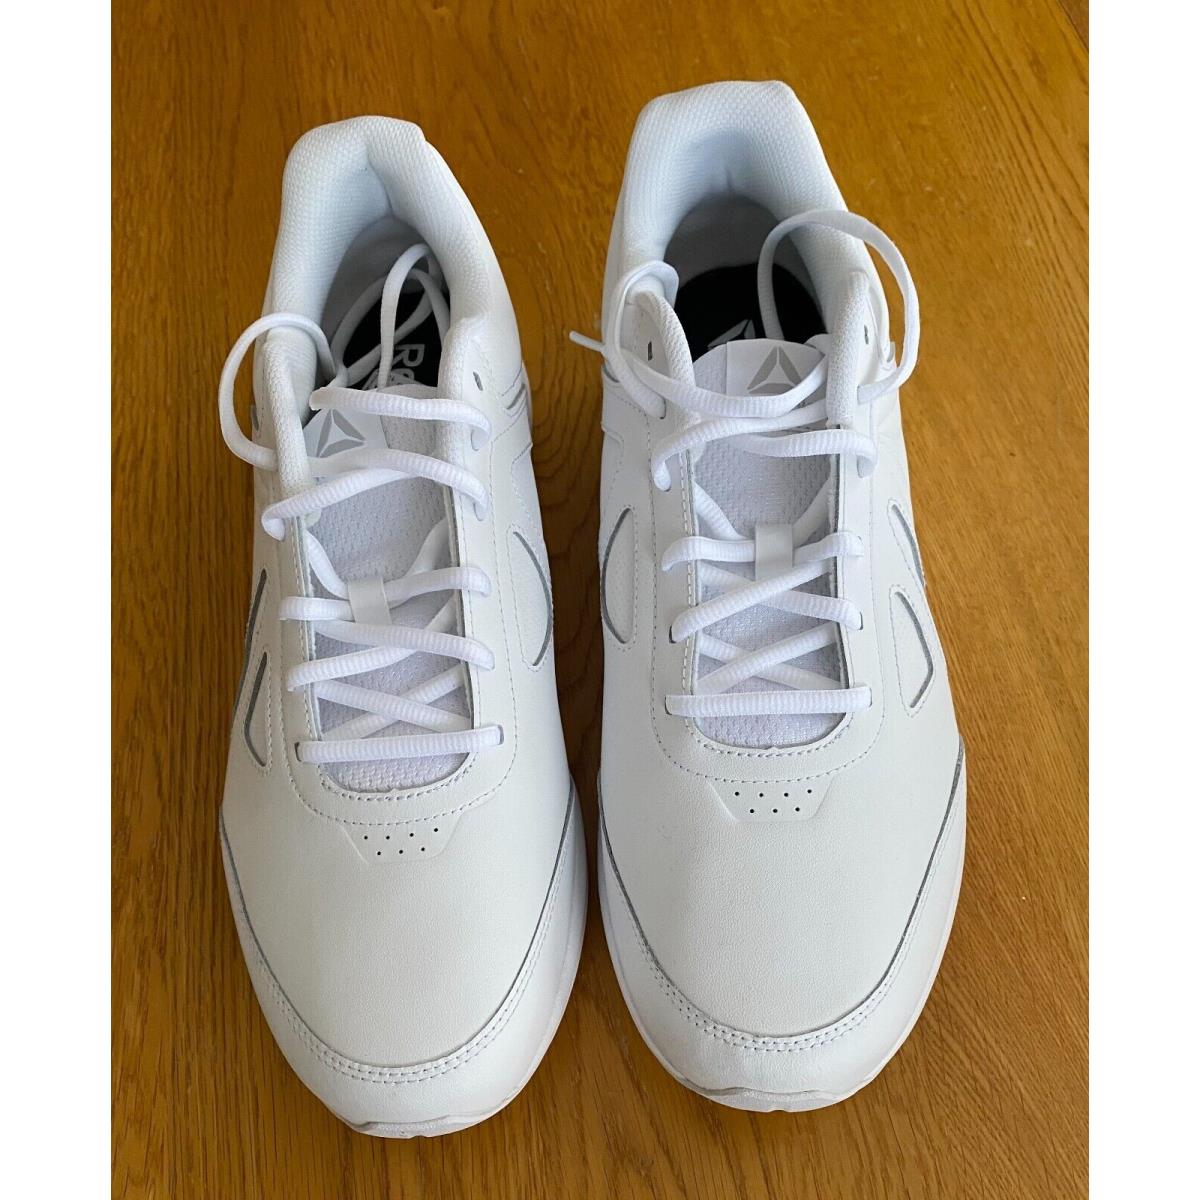 Reebok White Sneakers Size 11.5 Width 2E bs9537 Ships - White